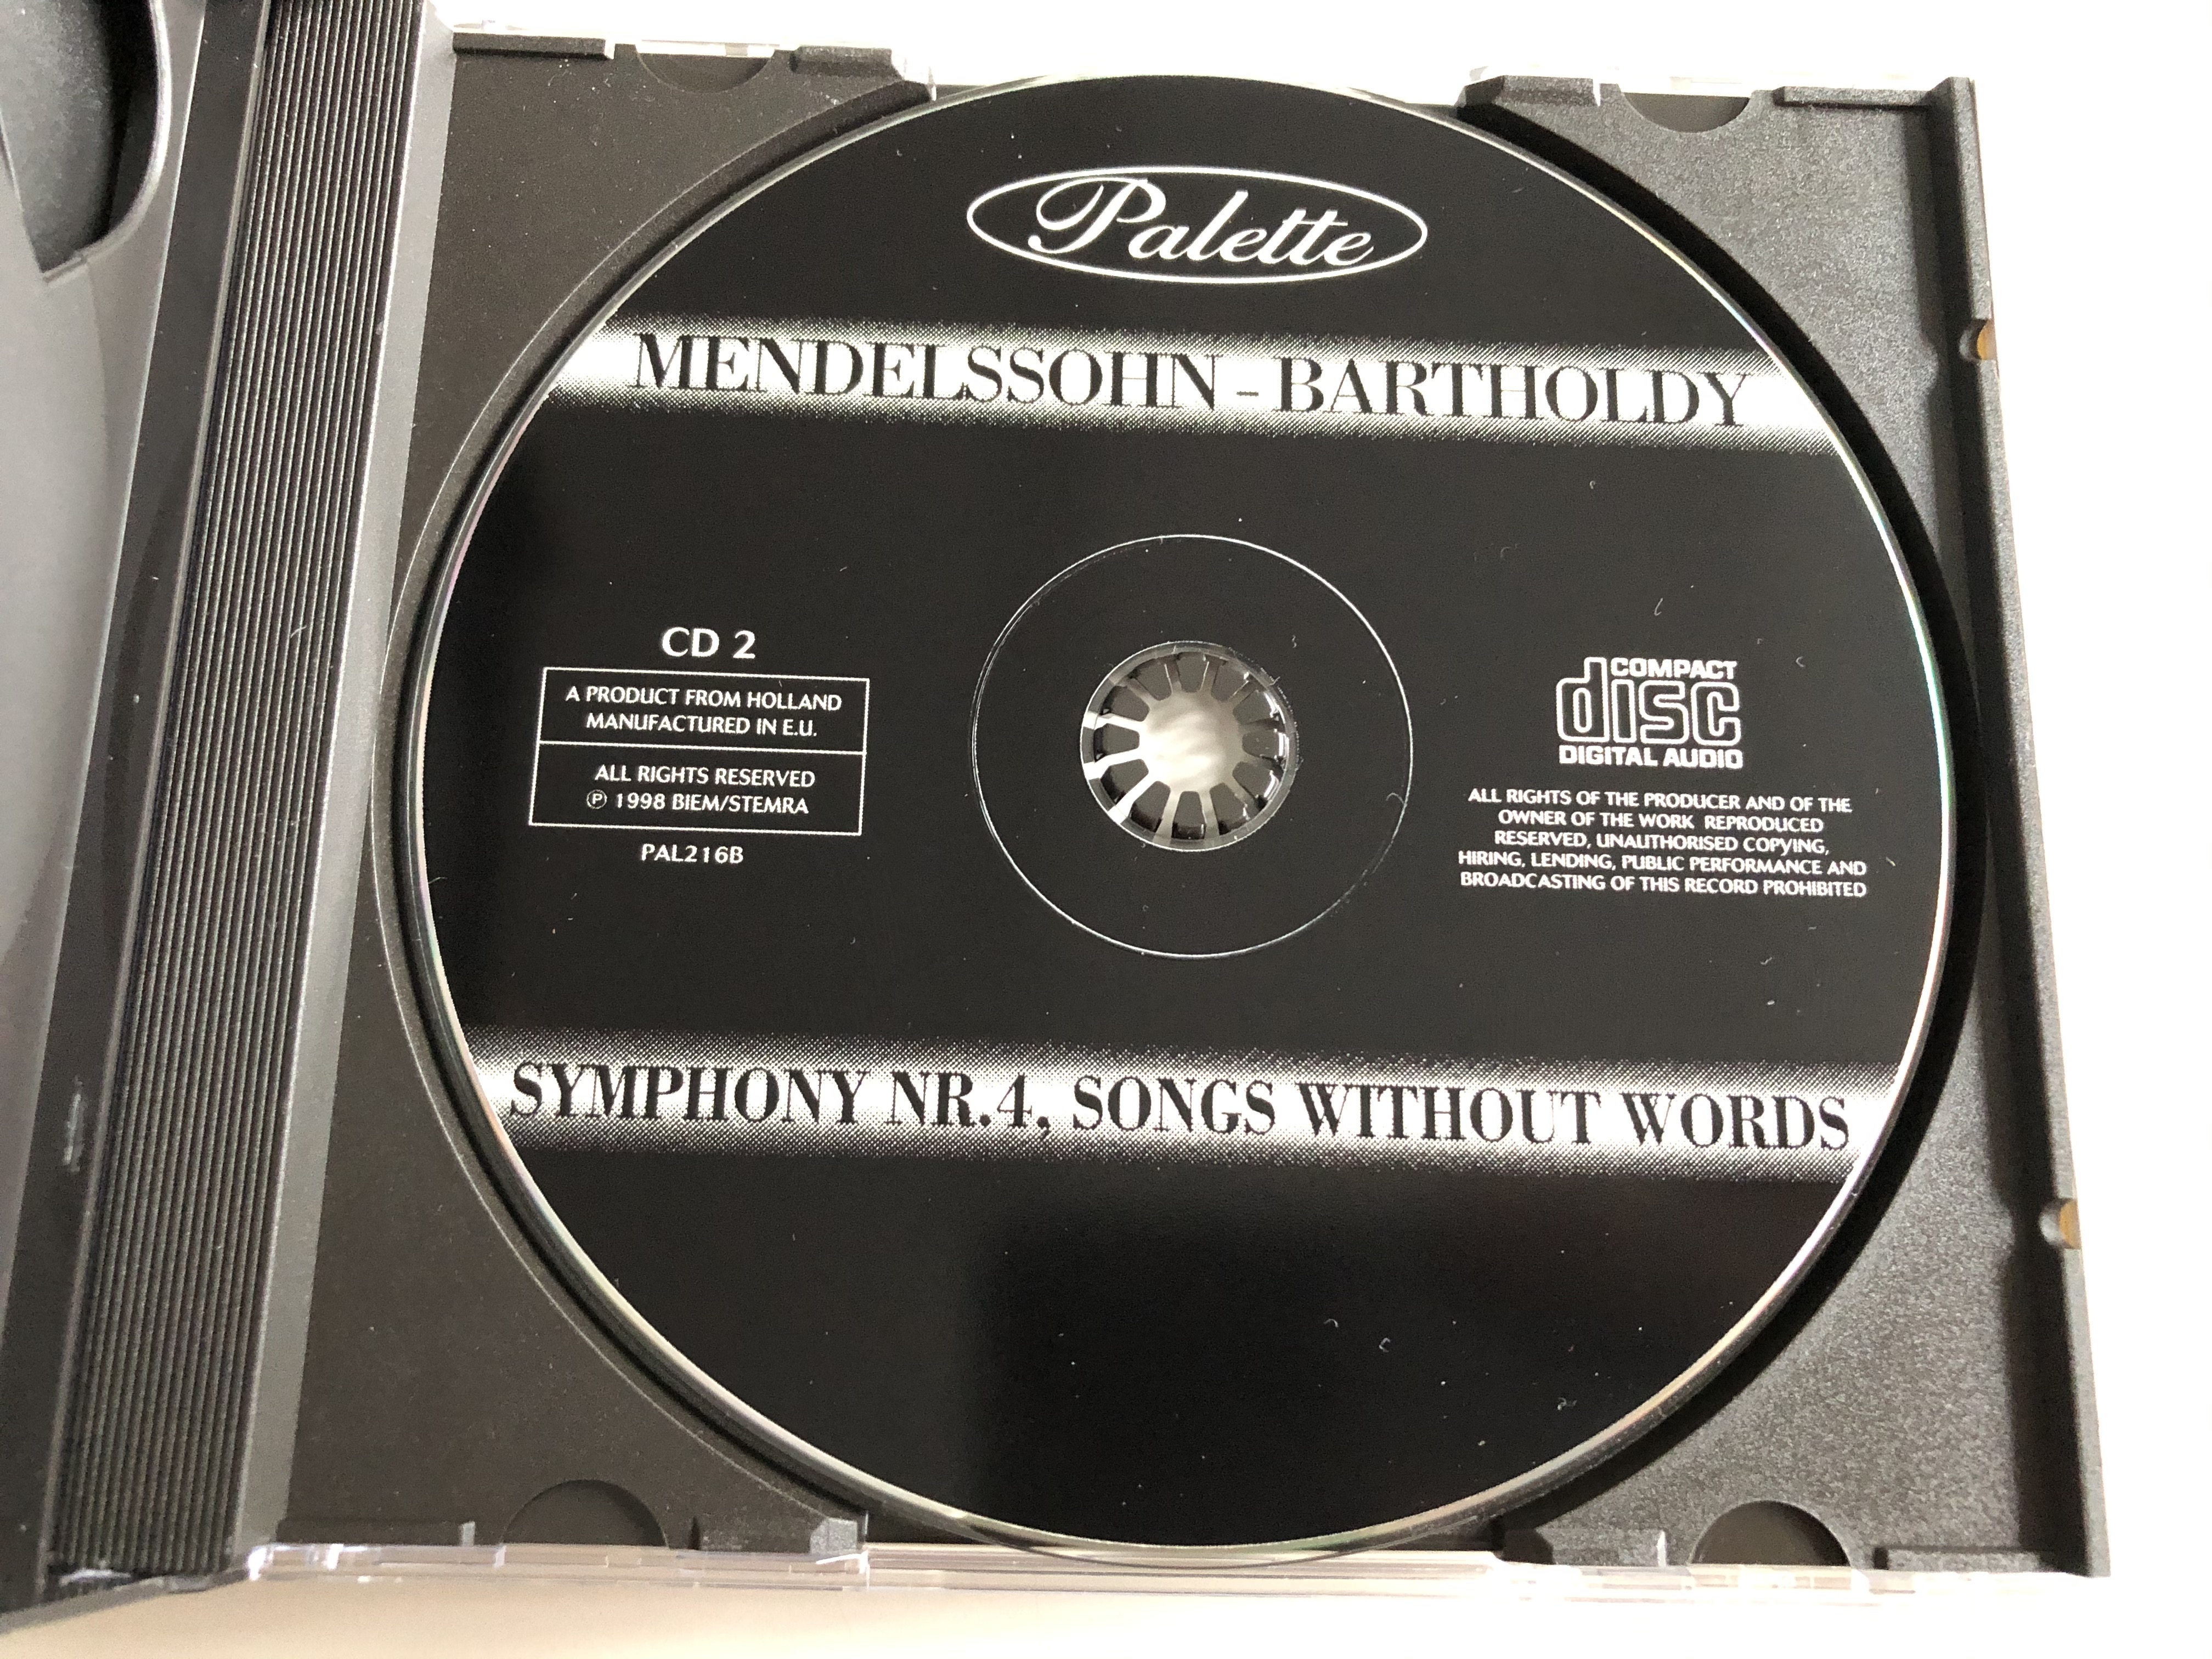 felix-mendelssohn-bartholdy-midsummernightsdream-violin-concerto-symphony-no.-4-palette-2x-audio-cd-1998-pal-216-3-.jpg